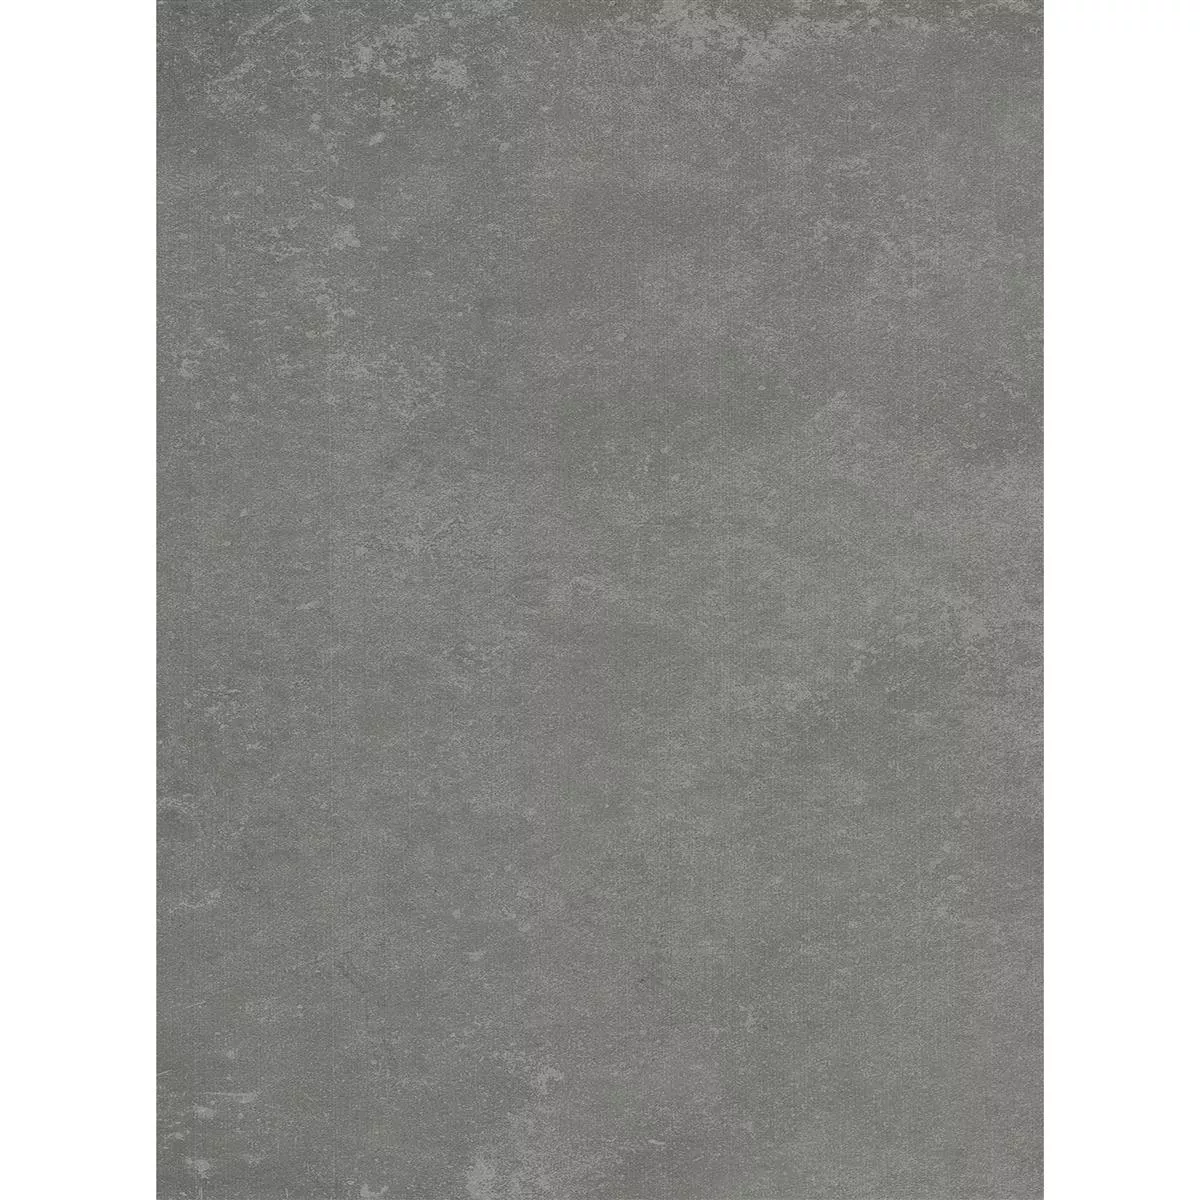 Ladrilhos Nepal Cinza Escuro 60x120x0,7cm